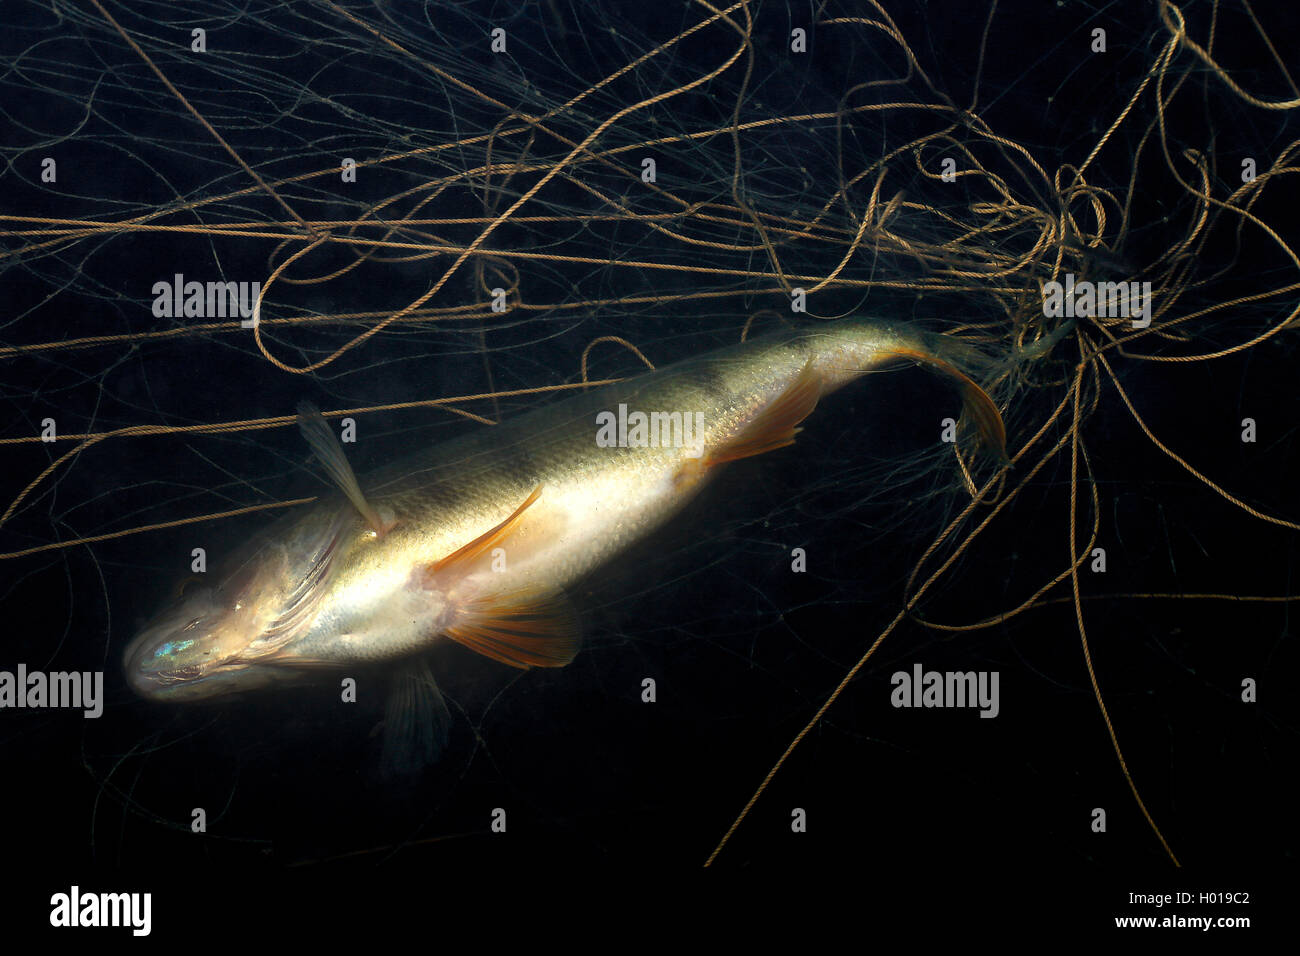 Perca Europea Redfin, perca, Perca (Perca fluviatilis), perca muerta en una red, vista desde abajo, bajo el agua, Rumania, Delta del Danubio Foto de stock